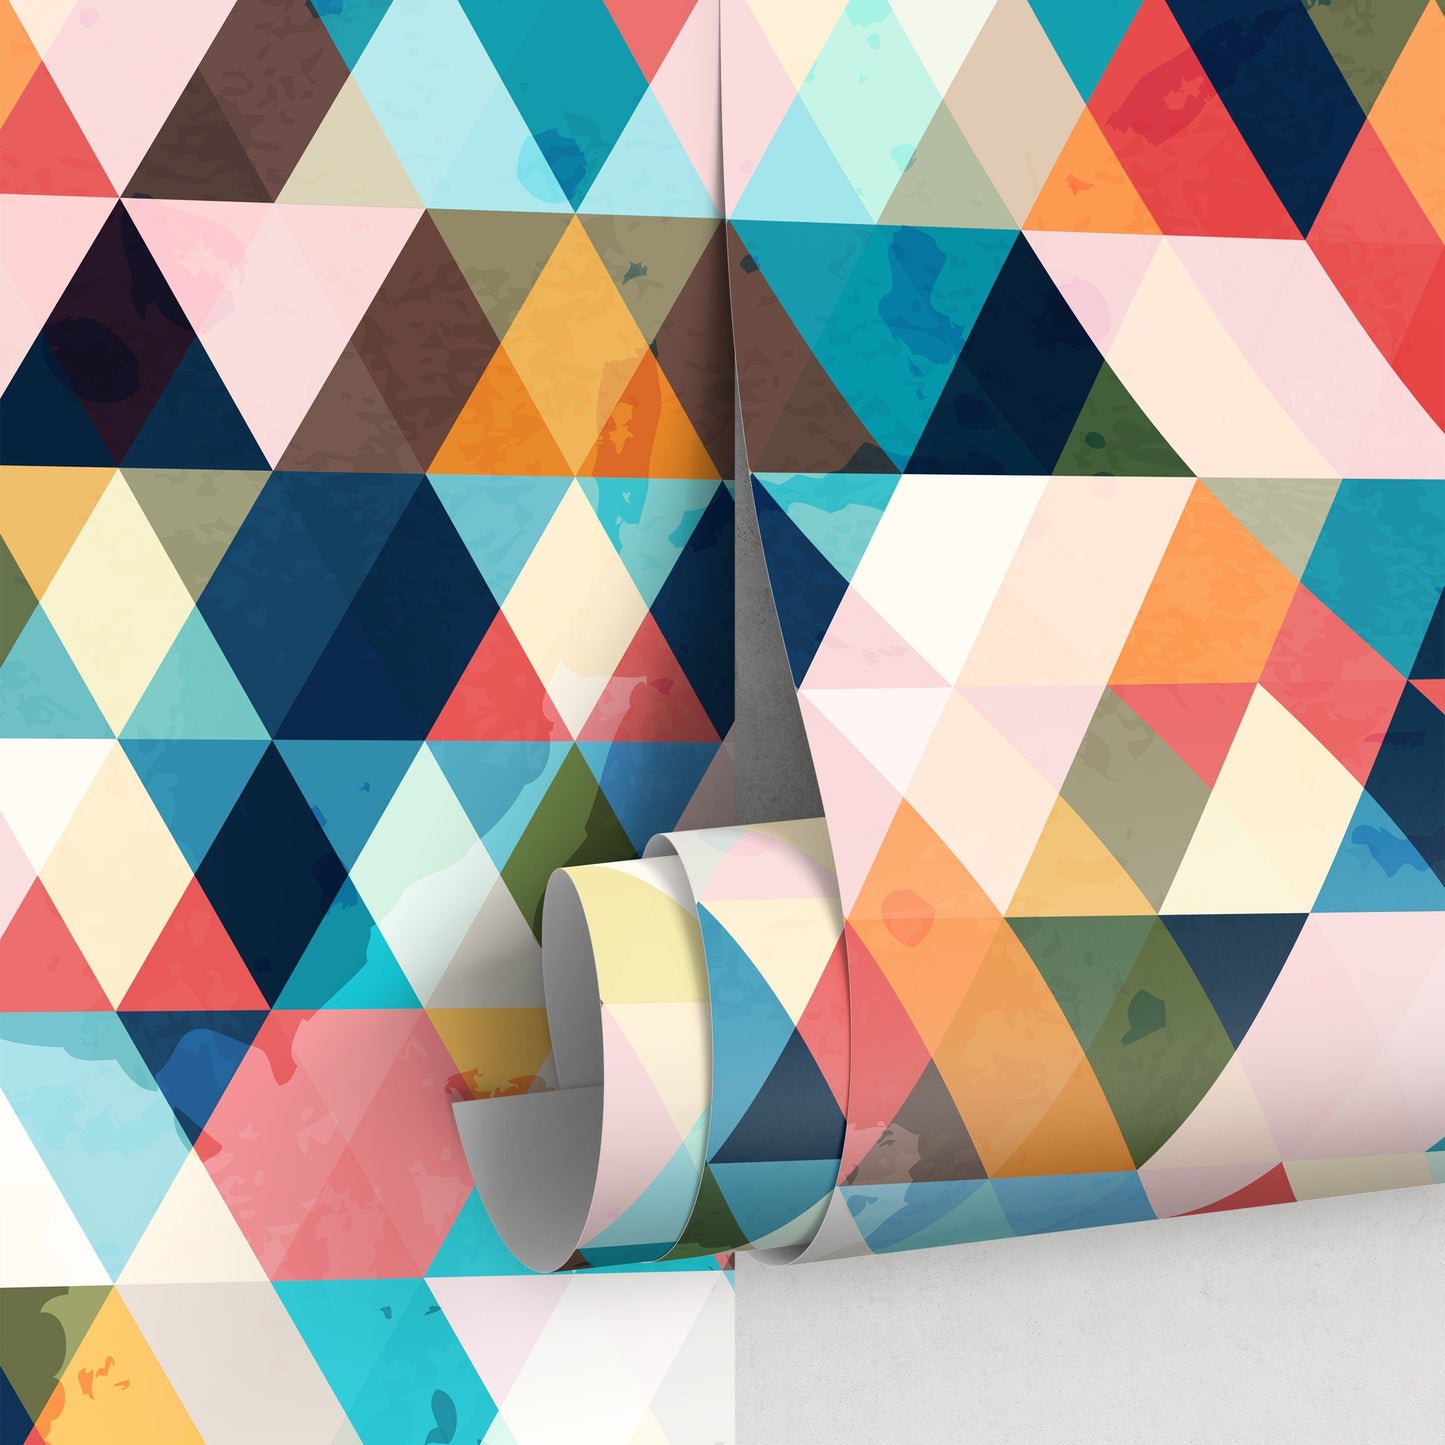 Geometric wallpaper, Triangle Wallpaper, Watercolor Wallpaper, Triangle Pattern, Geometric Wallpaper, Removable wallpaper - A153